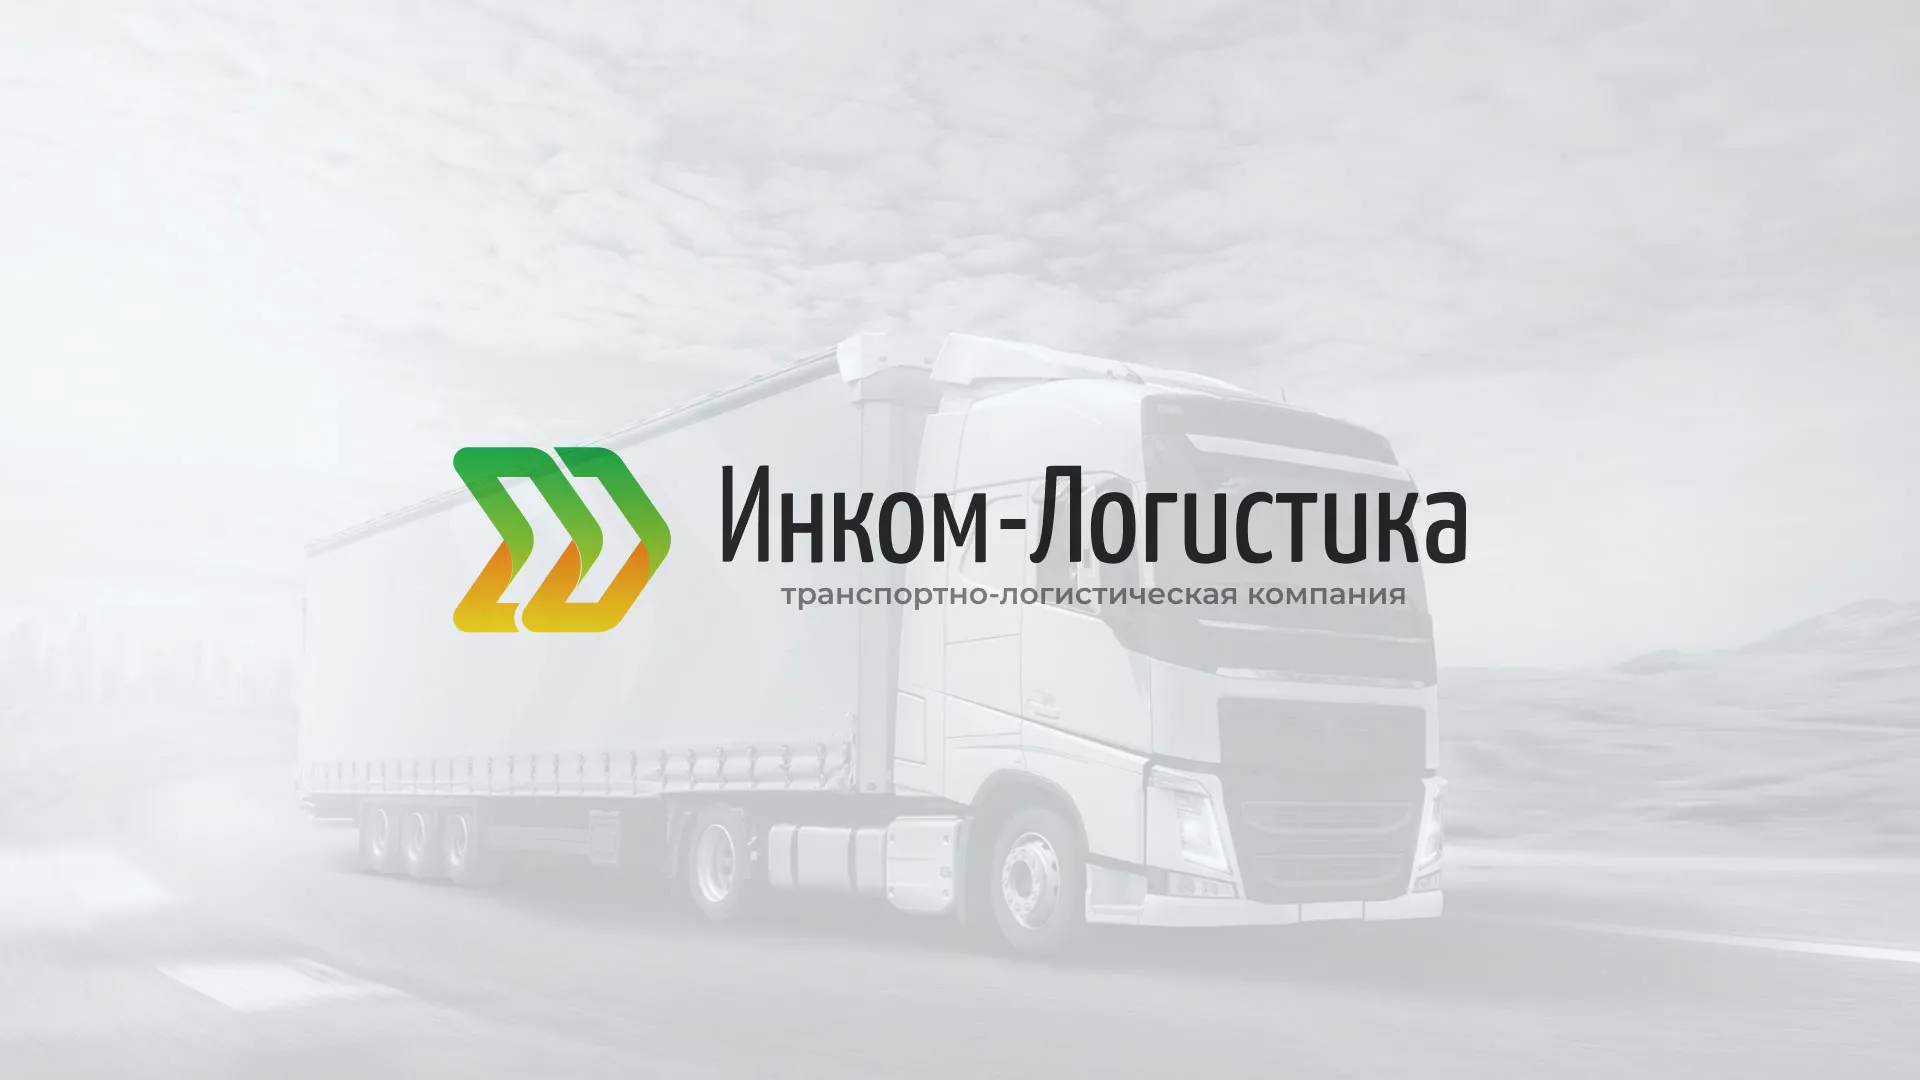 Разработка логотипа и сайта компании «Инком-Логистика» в Юрюзани